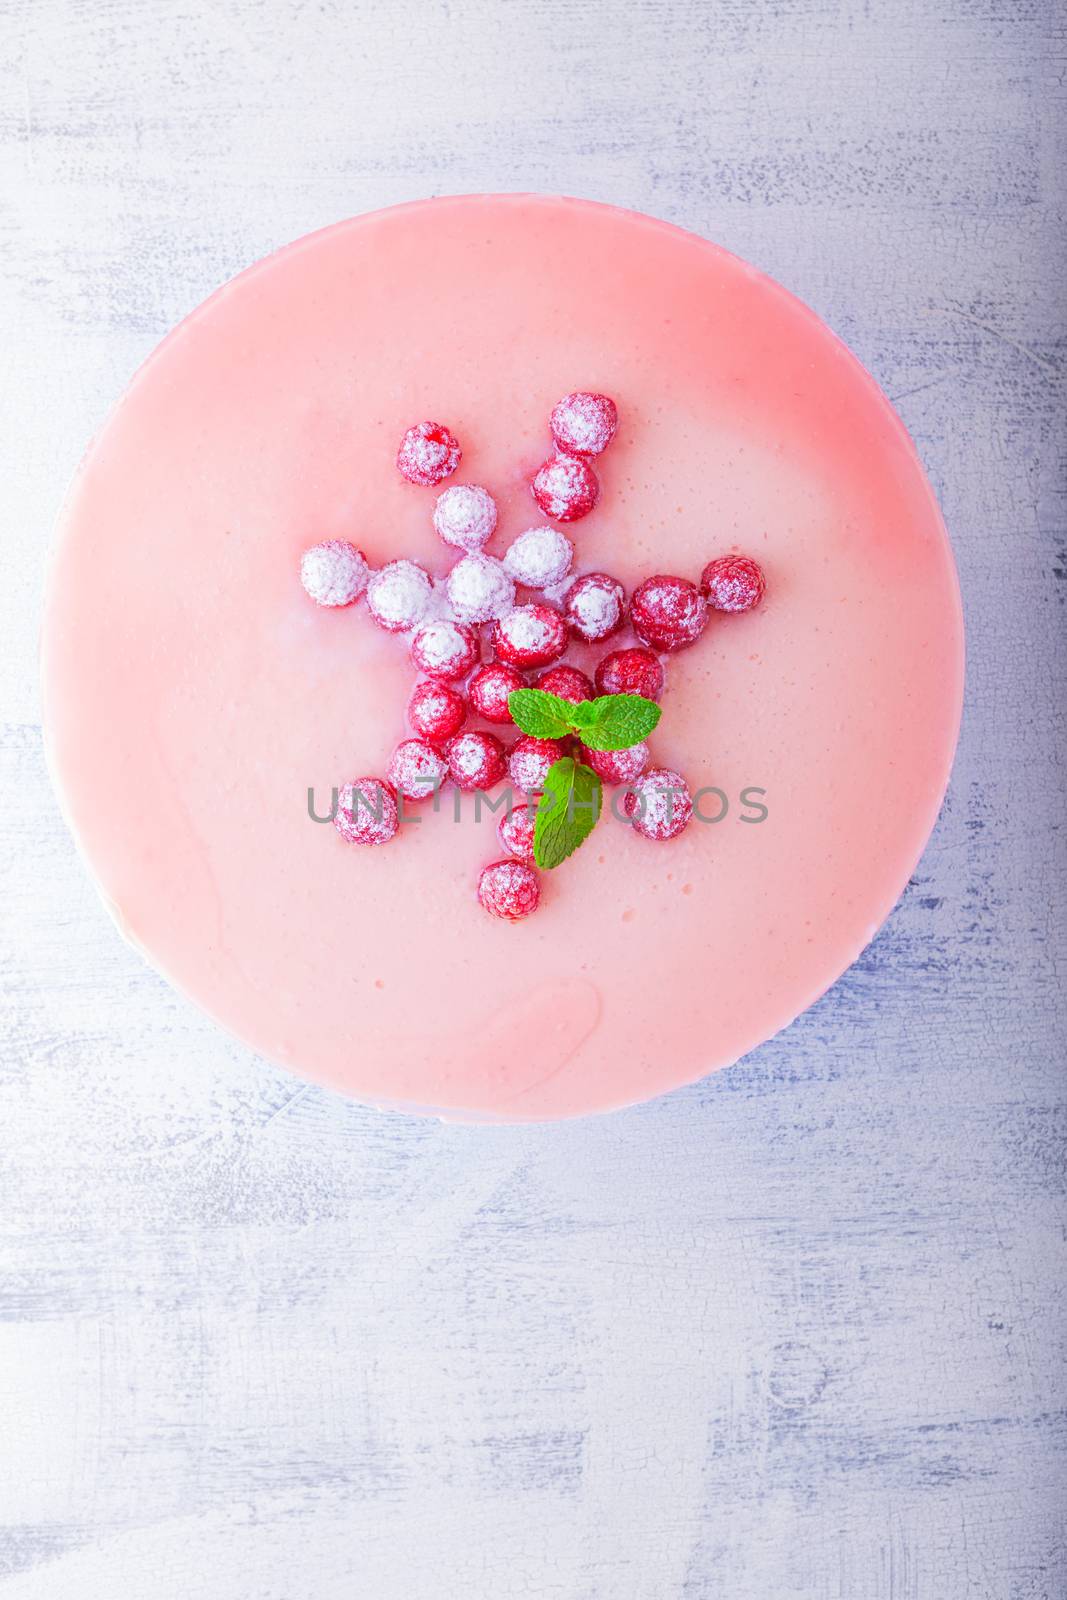 Raspberry yogurt cake served on a white table